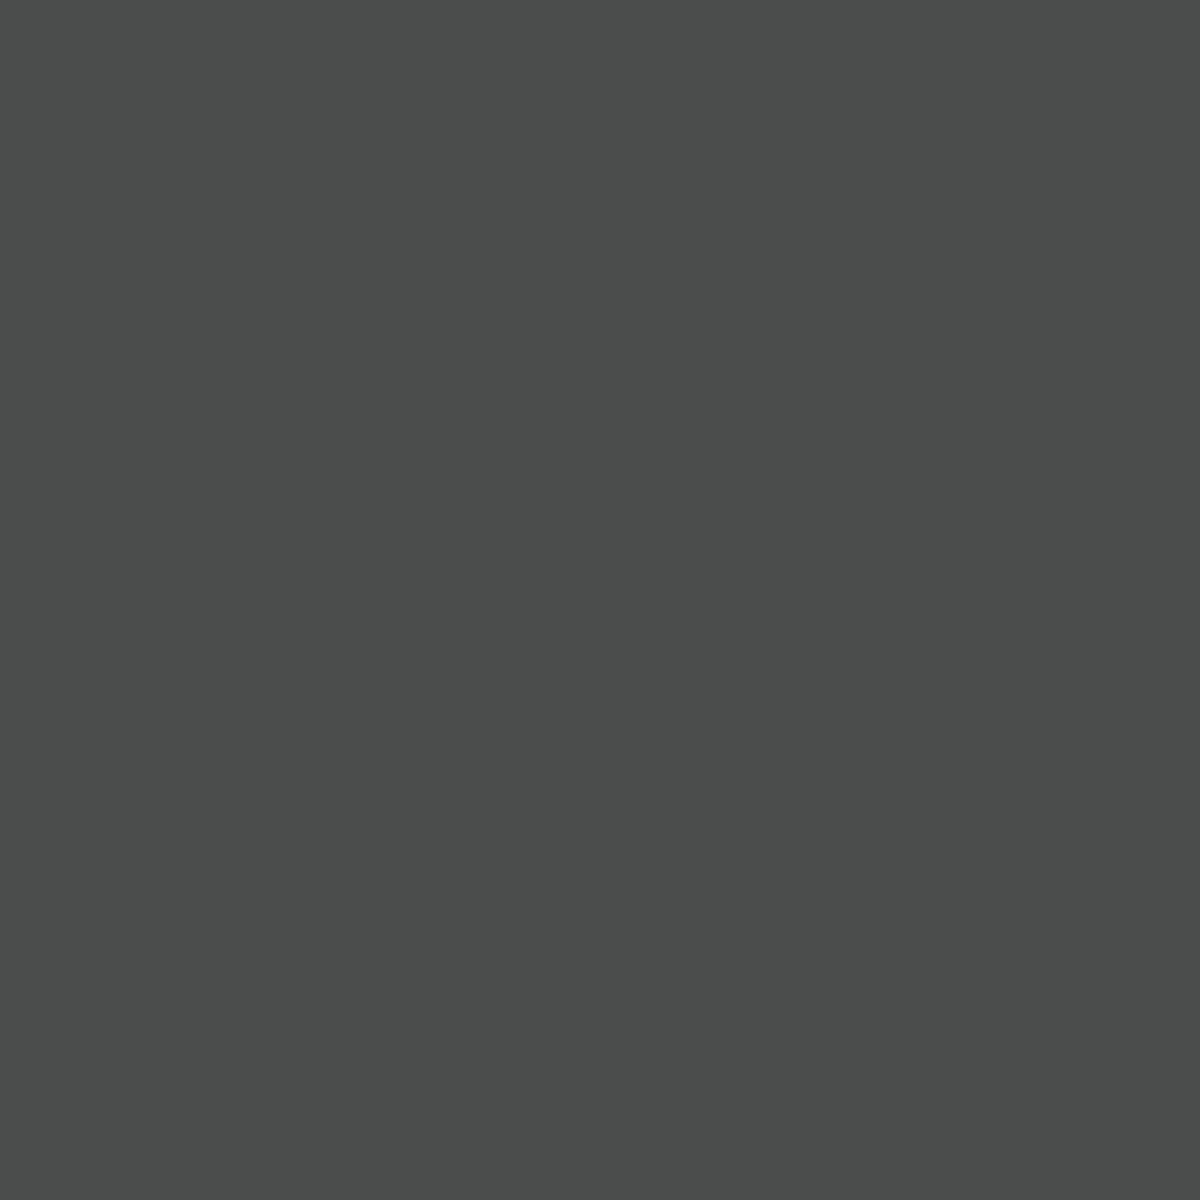 DARK STEEL - Tamaños (1,22 x 2,44m)  |  Espesor (0.7mm)